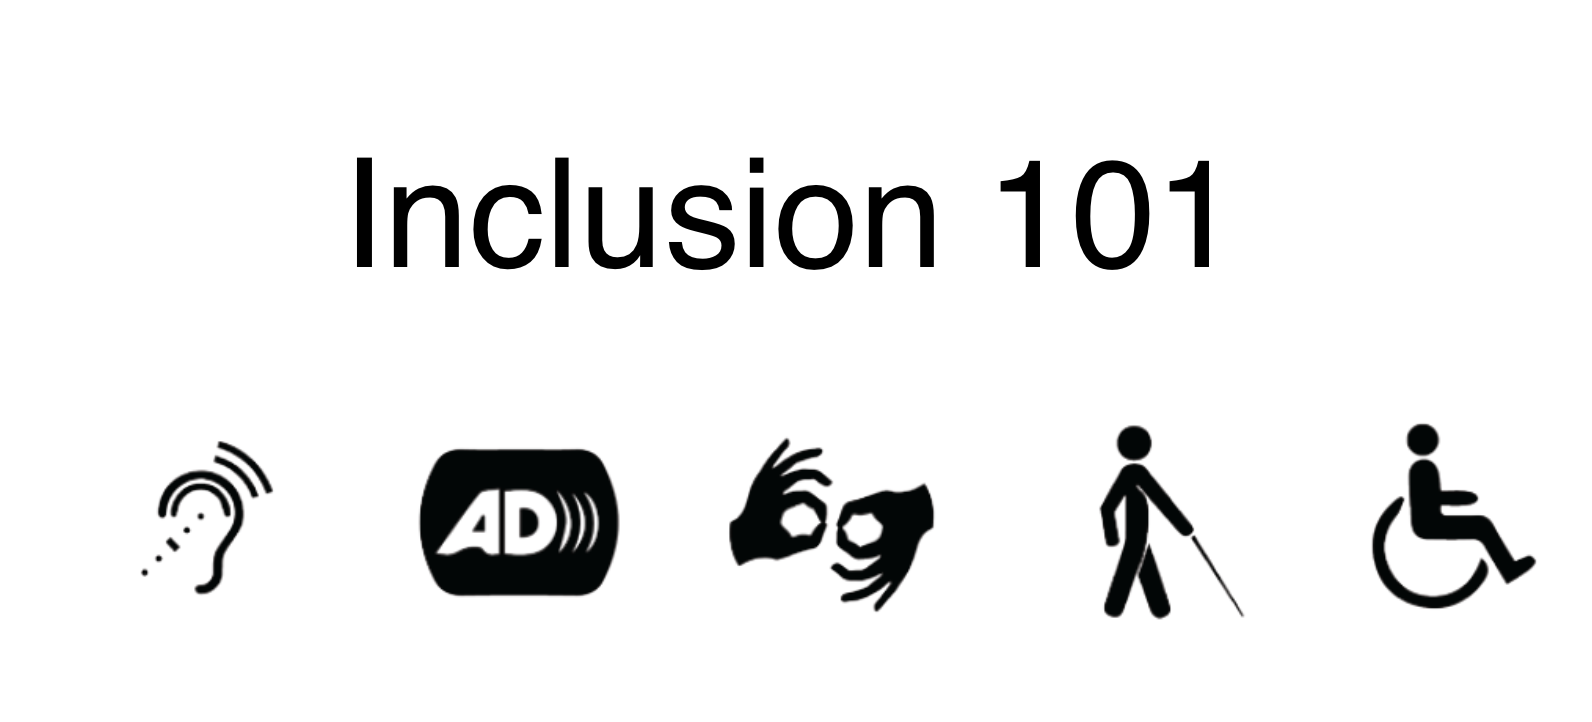 inclusion-101-inclusive-distancing-silent-rhythms